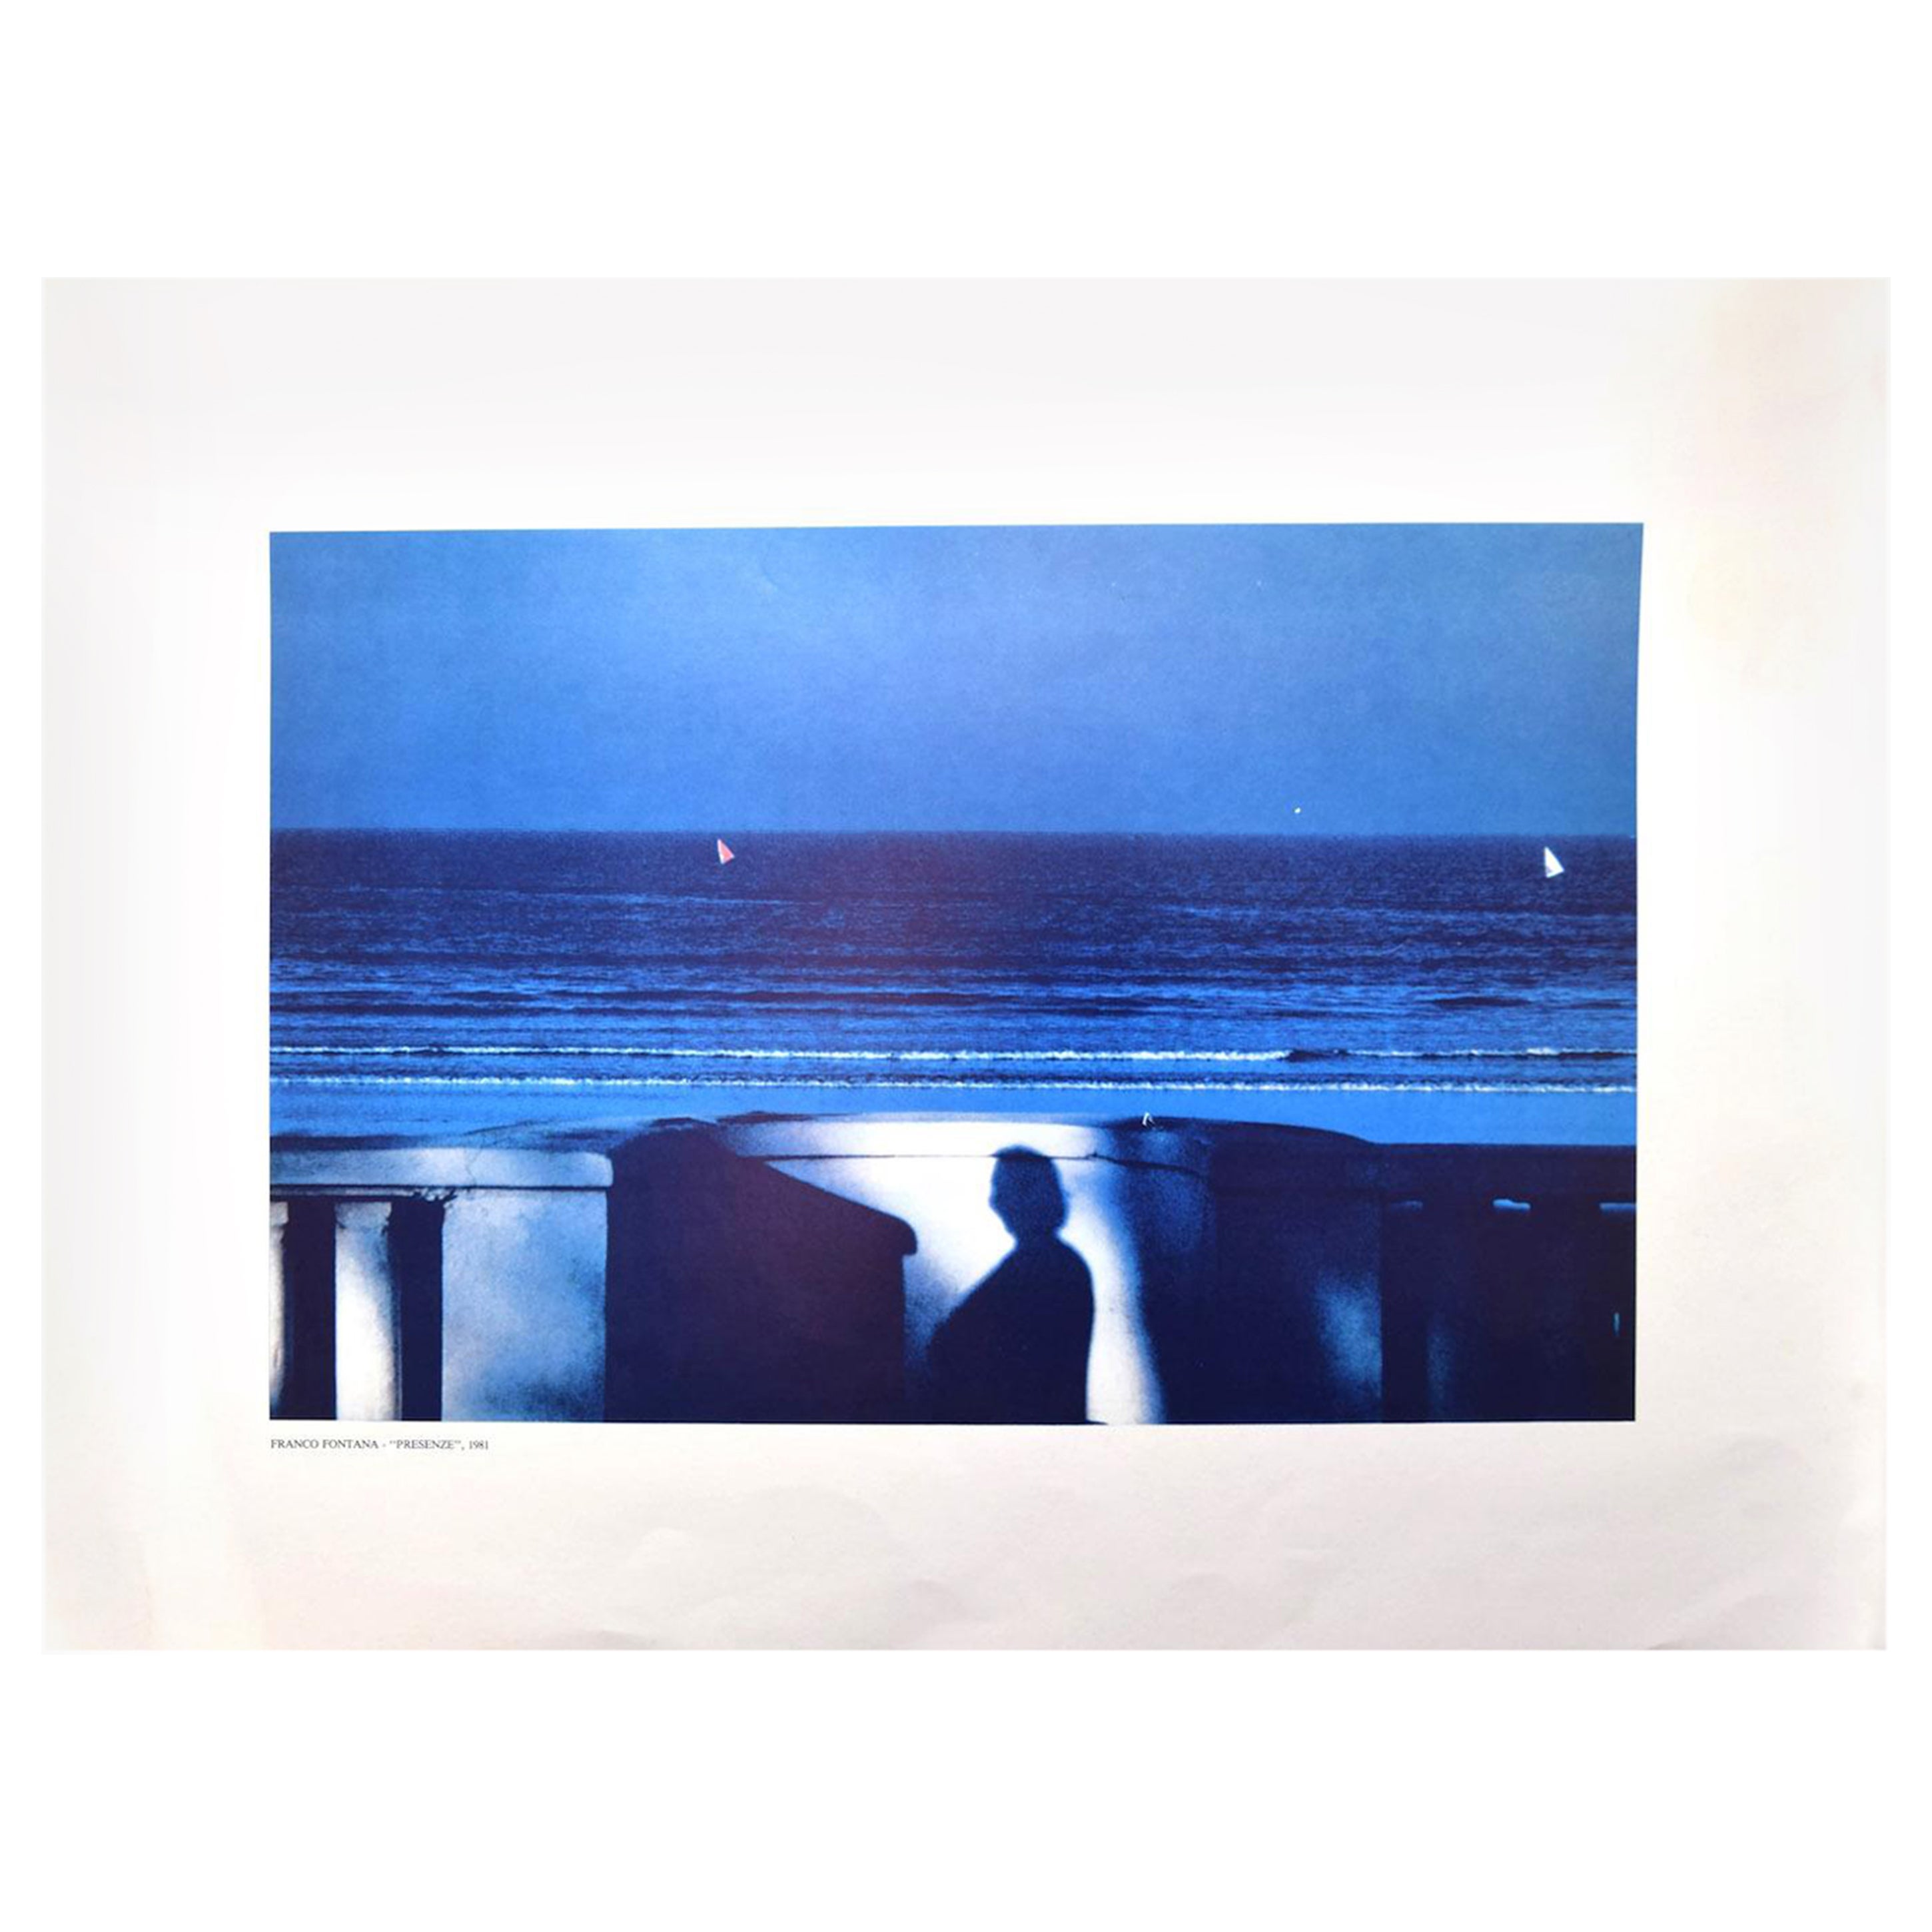 Presence – Offsetdruck im Vintage-Stil nach Franco Fontana – 1981